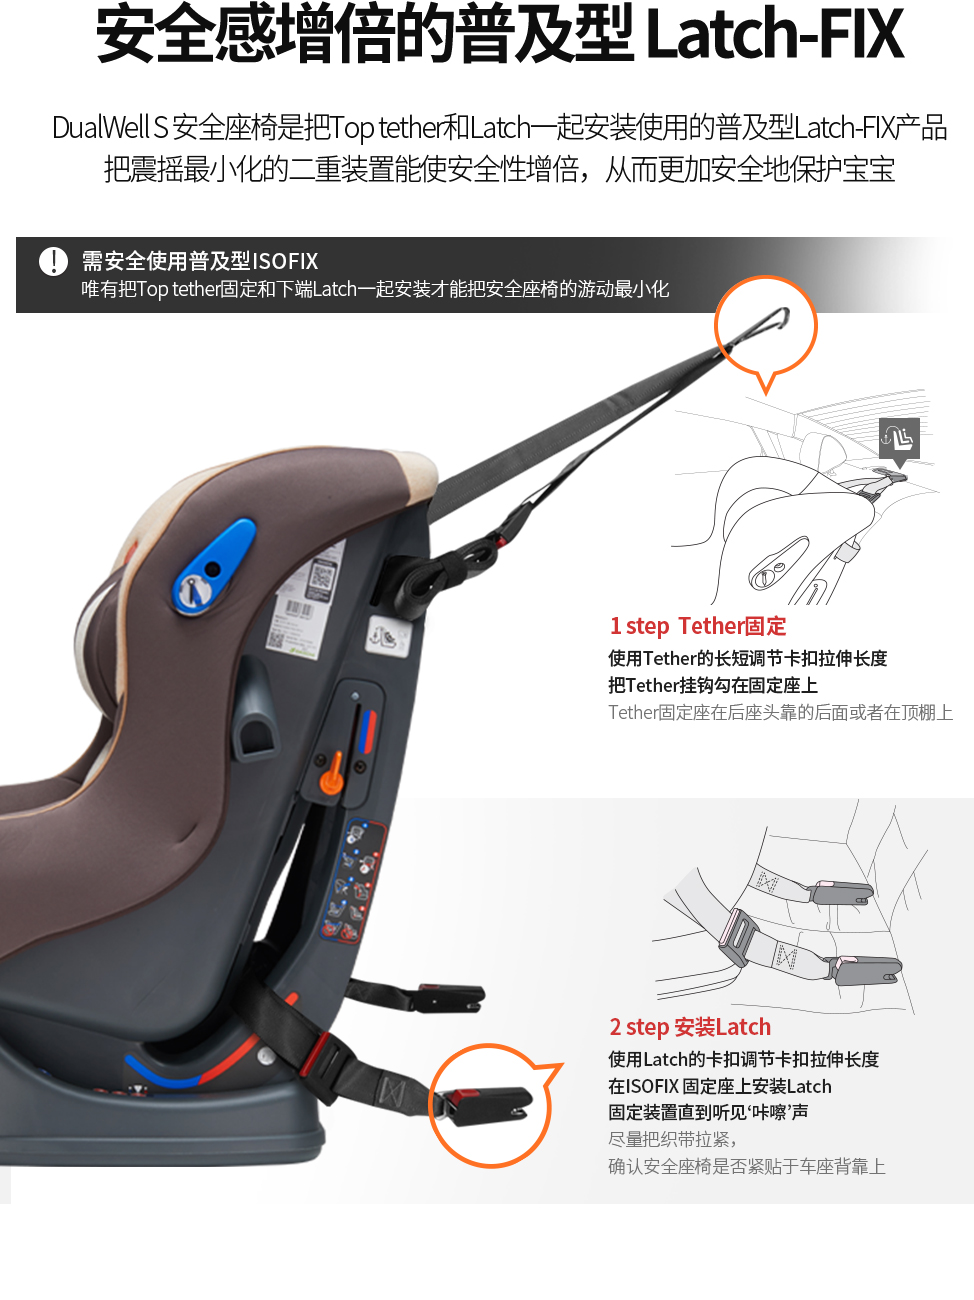 DualWell S 安全座椅是把Top tether和Latch一起安装使用的普及型Latch-FIX产品. 把震摇最小化的二重装置能使安全性增倍，从而更加安全地保护宝宝. 玳奇 达尔文S